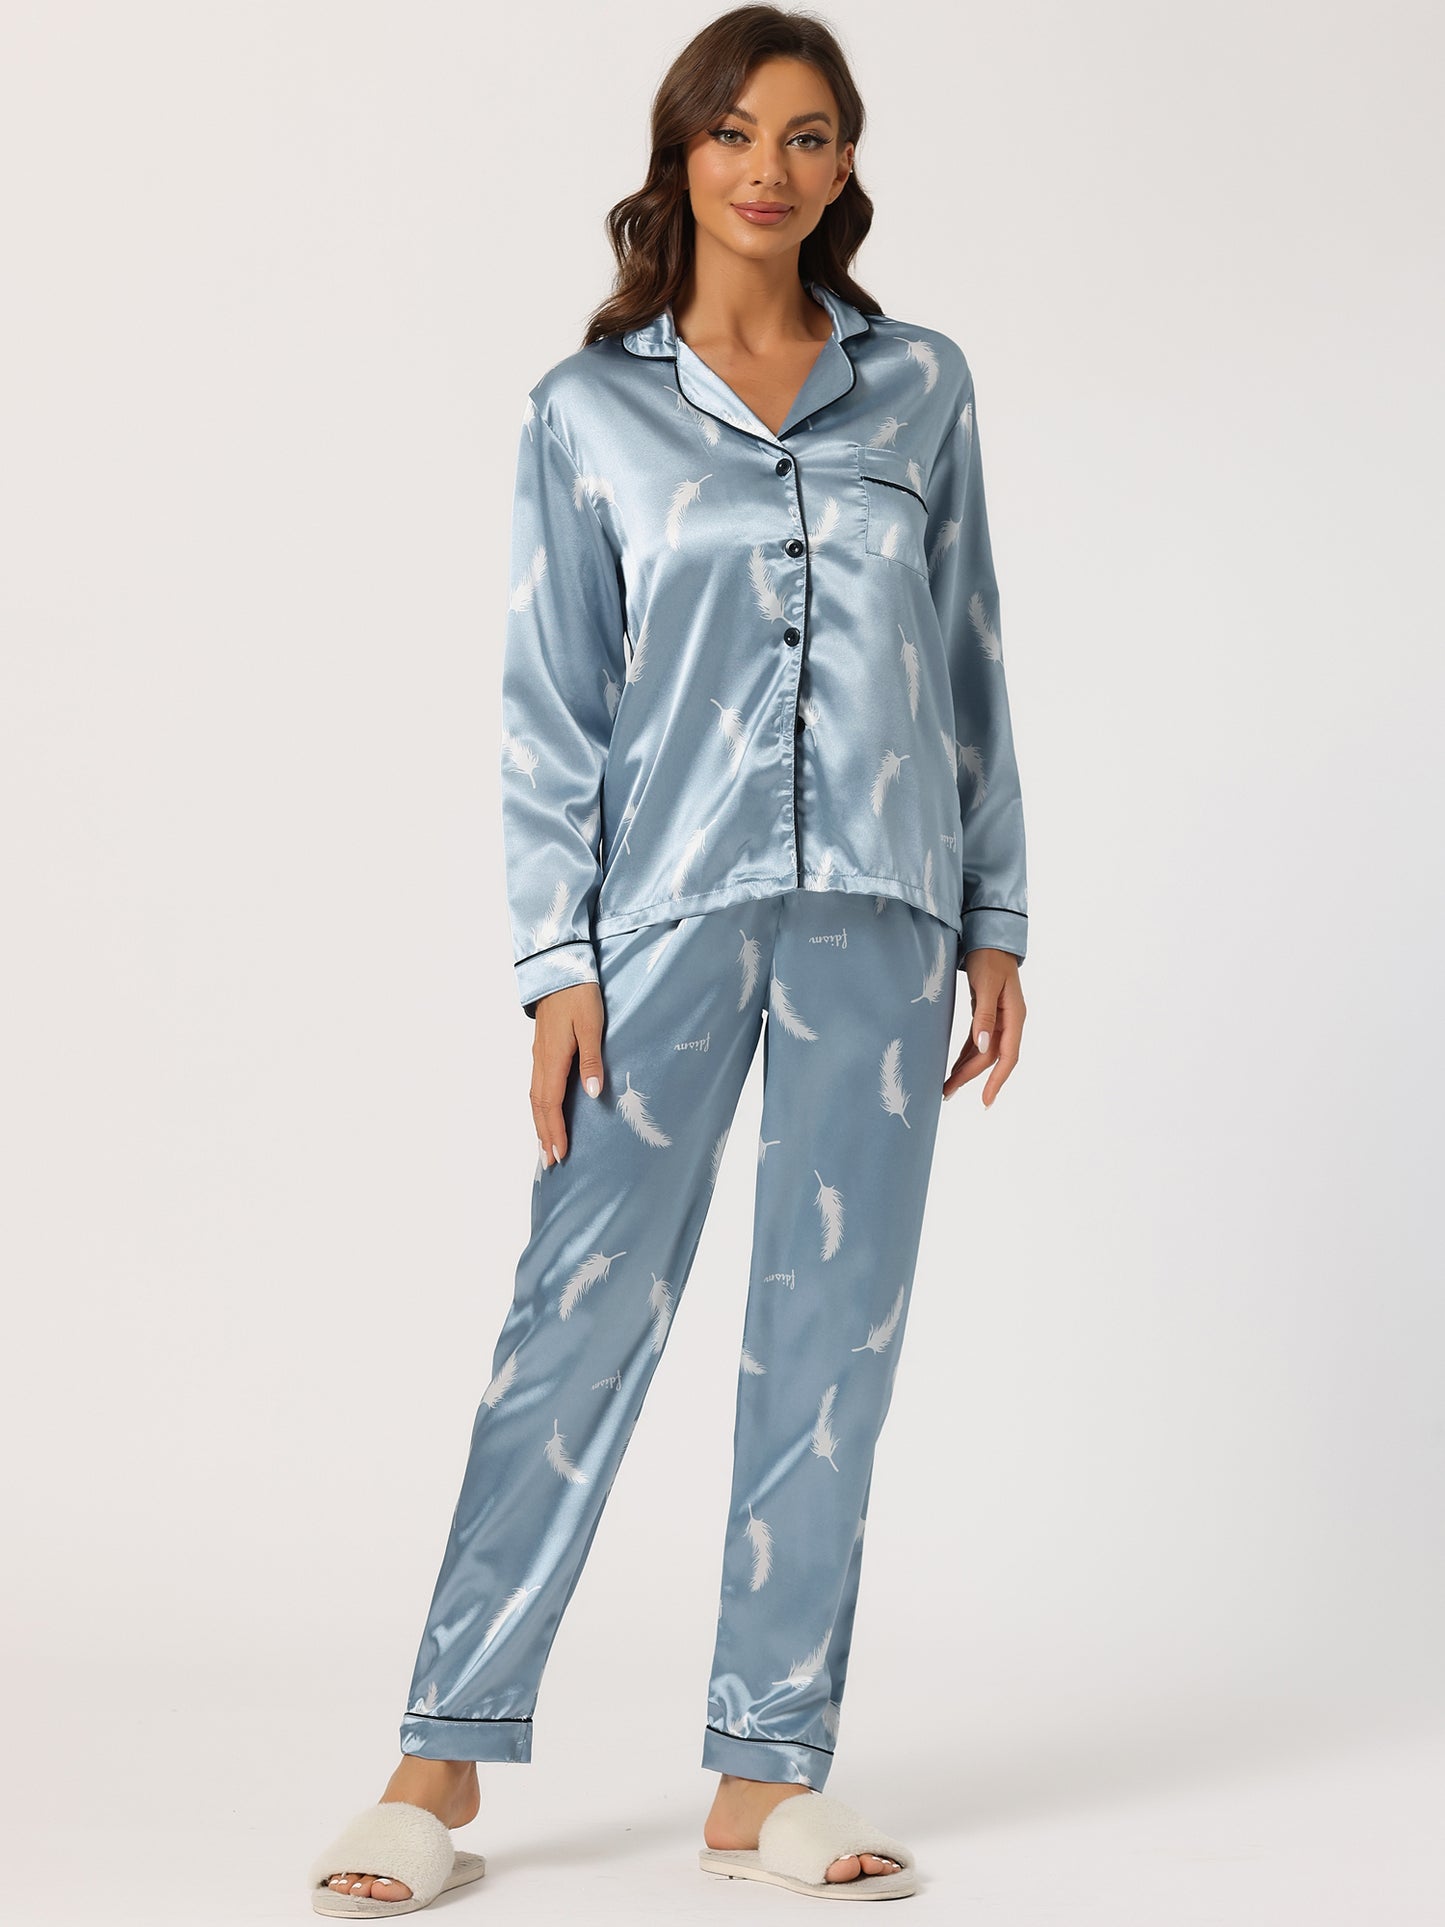 cheibear Pajama Sleep Shirt Nightwear Sleepwear Lounge Satin Pj Sets Light Blue